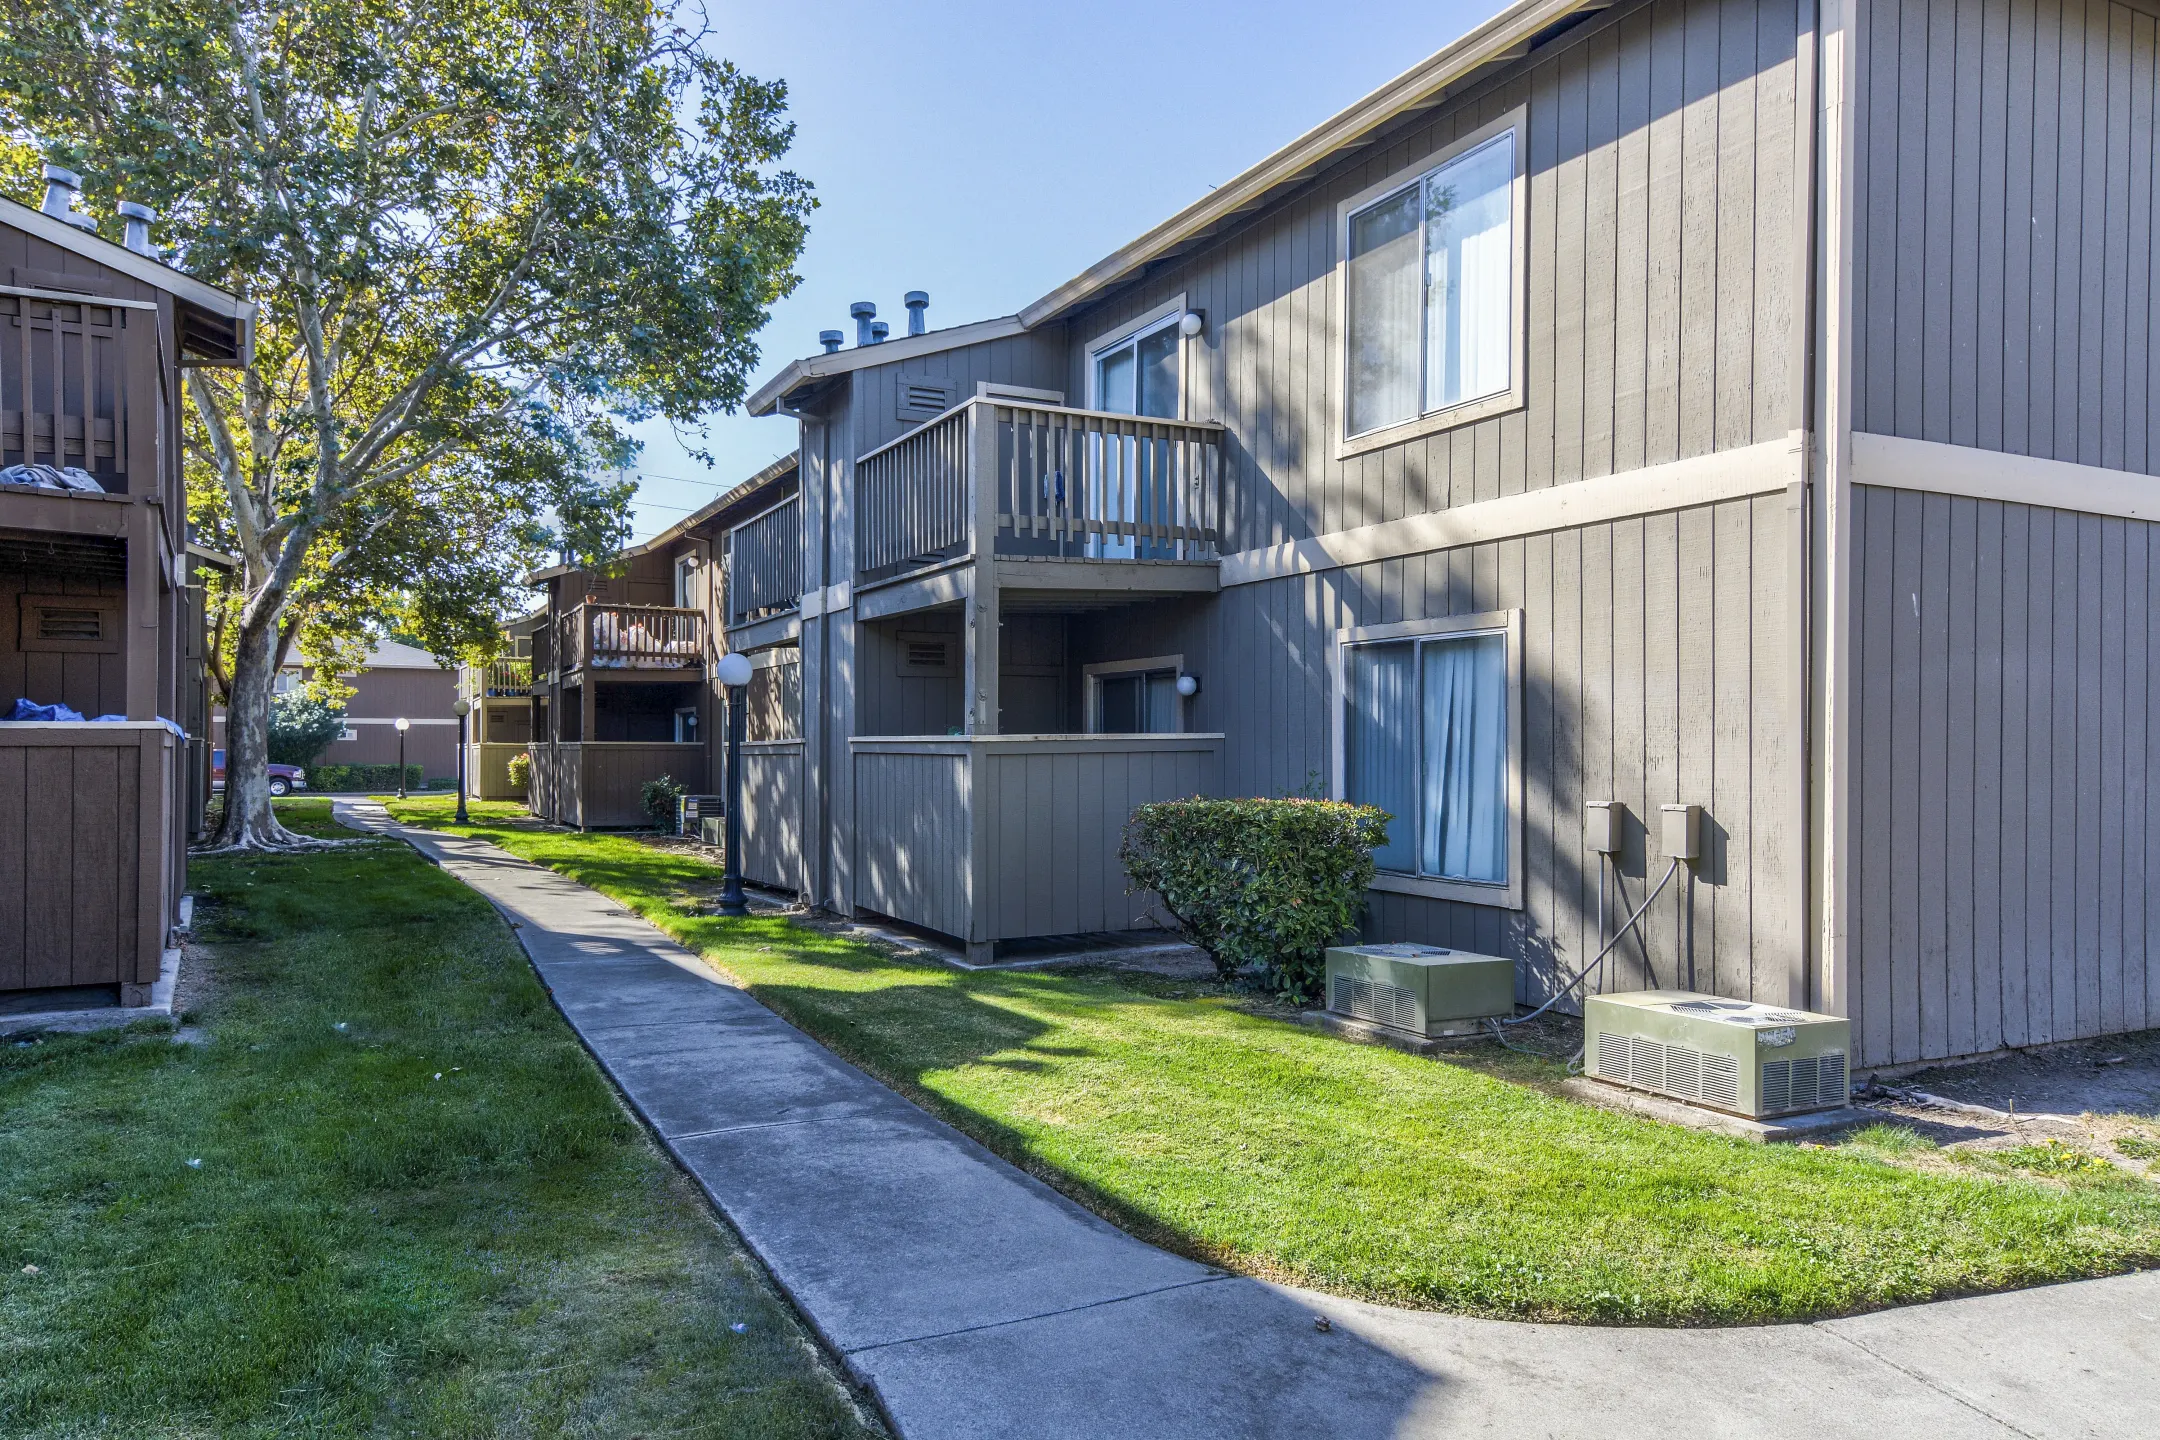 Building - Riverbank Apartments - Stockton, CA